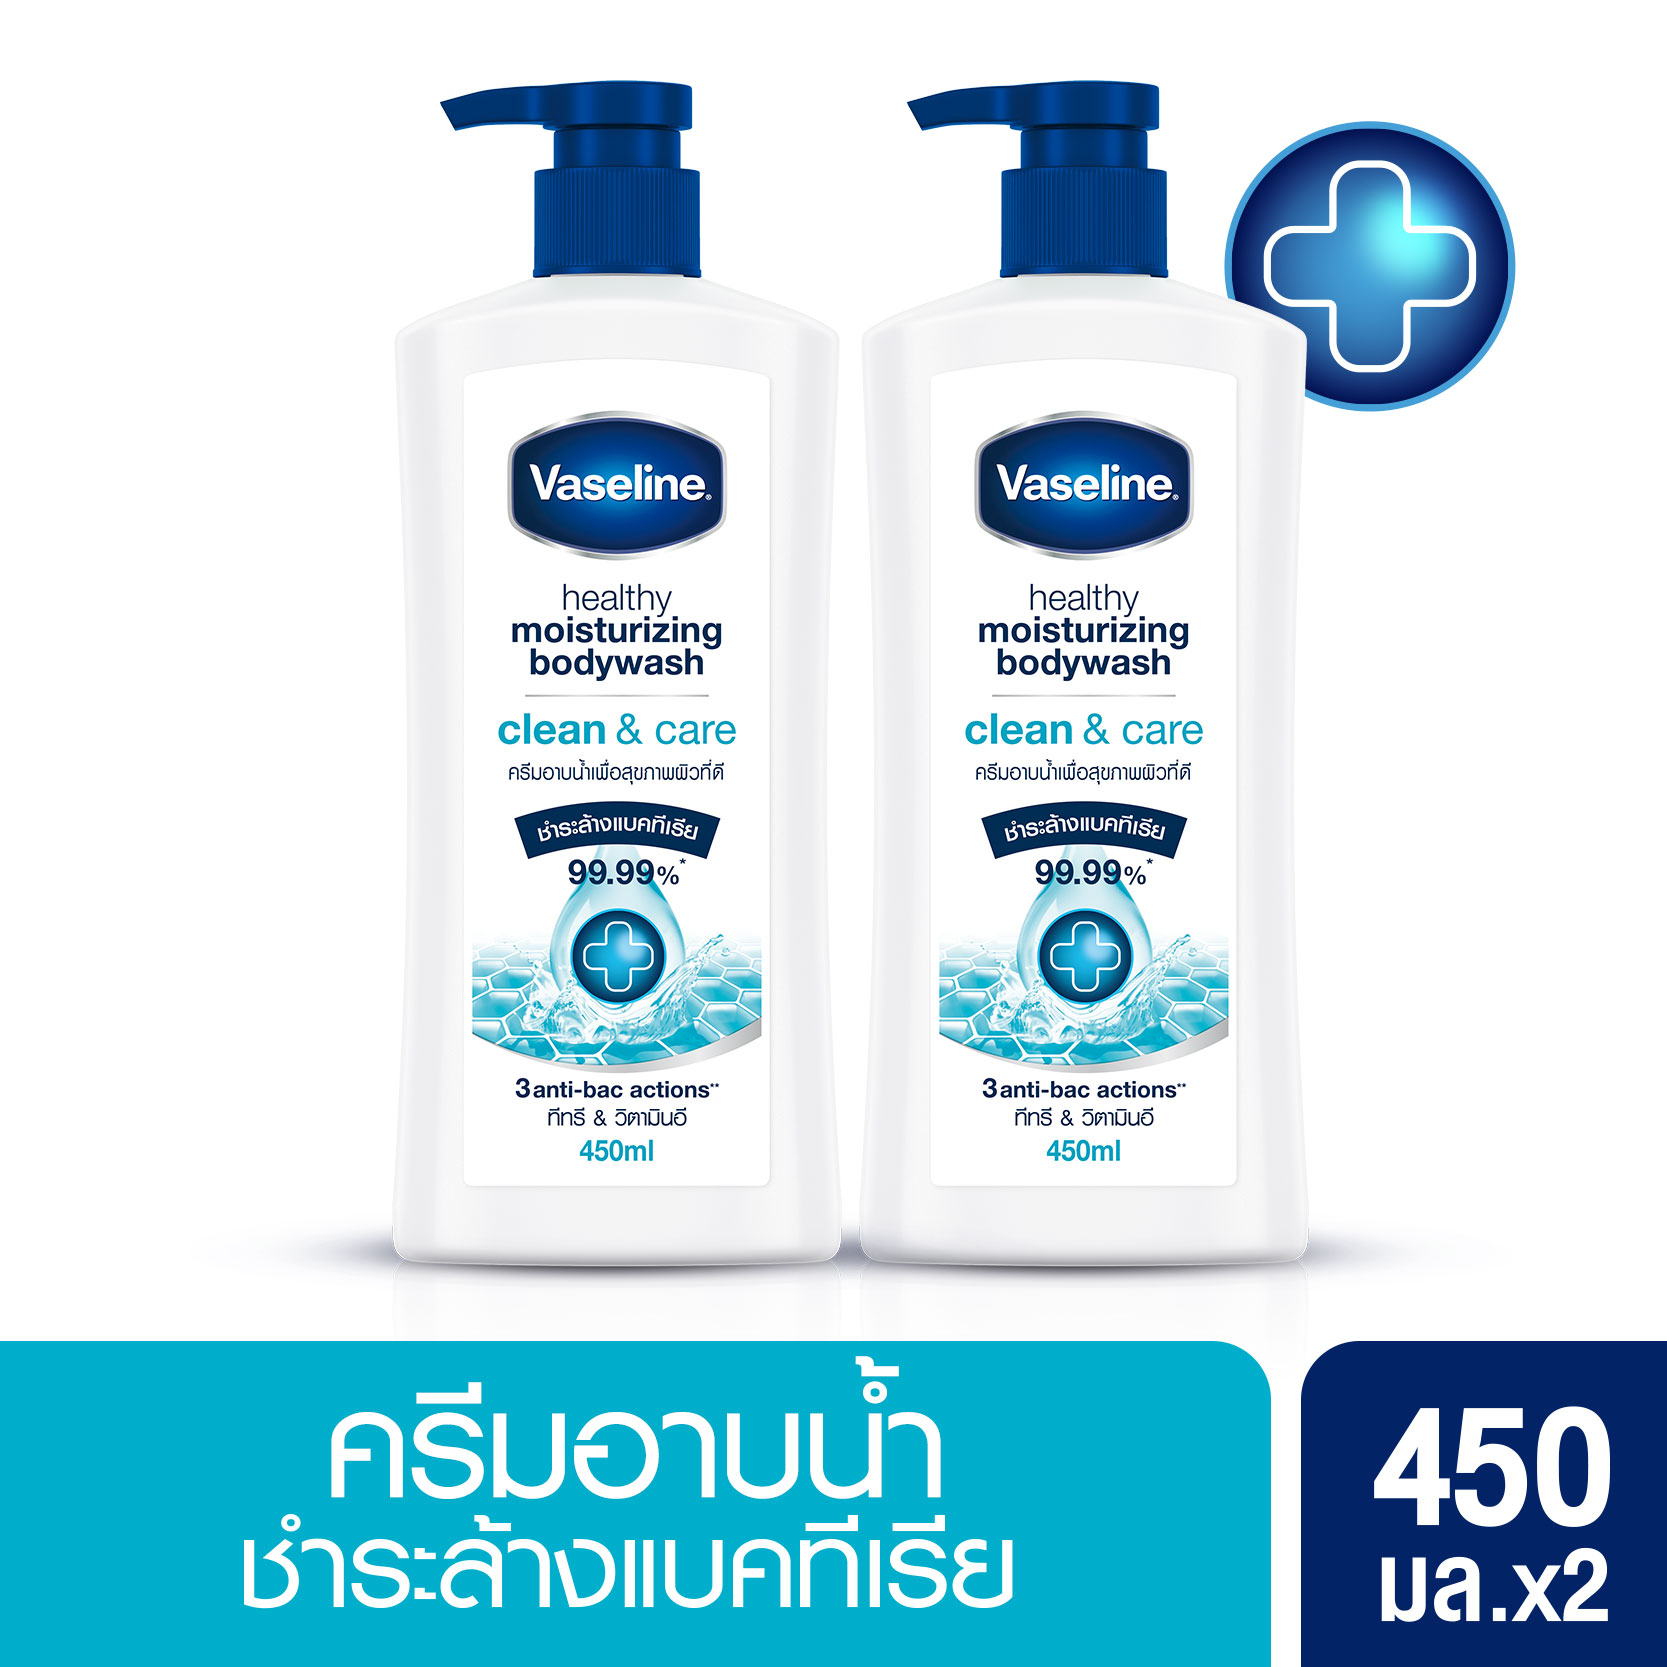 Vaseline moisturizing bodywash clean & care 450 ml. [x2] วาสลีน ครีมอาบน้ำ เพื่อสุขภาพผิวที่ดี ชำระล้างแบคทีเรีย 99.99E0 มล. [x2]